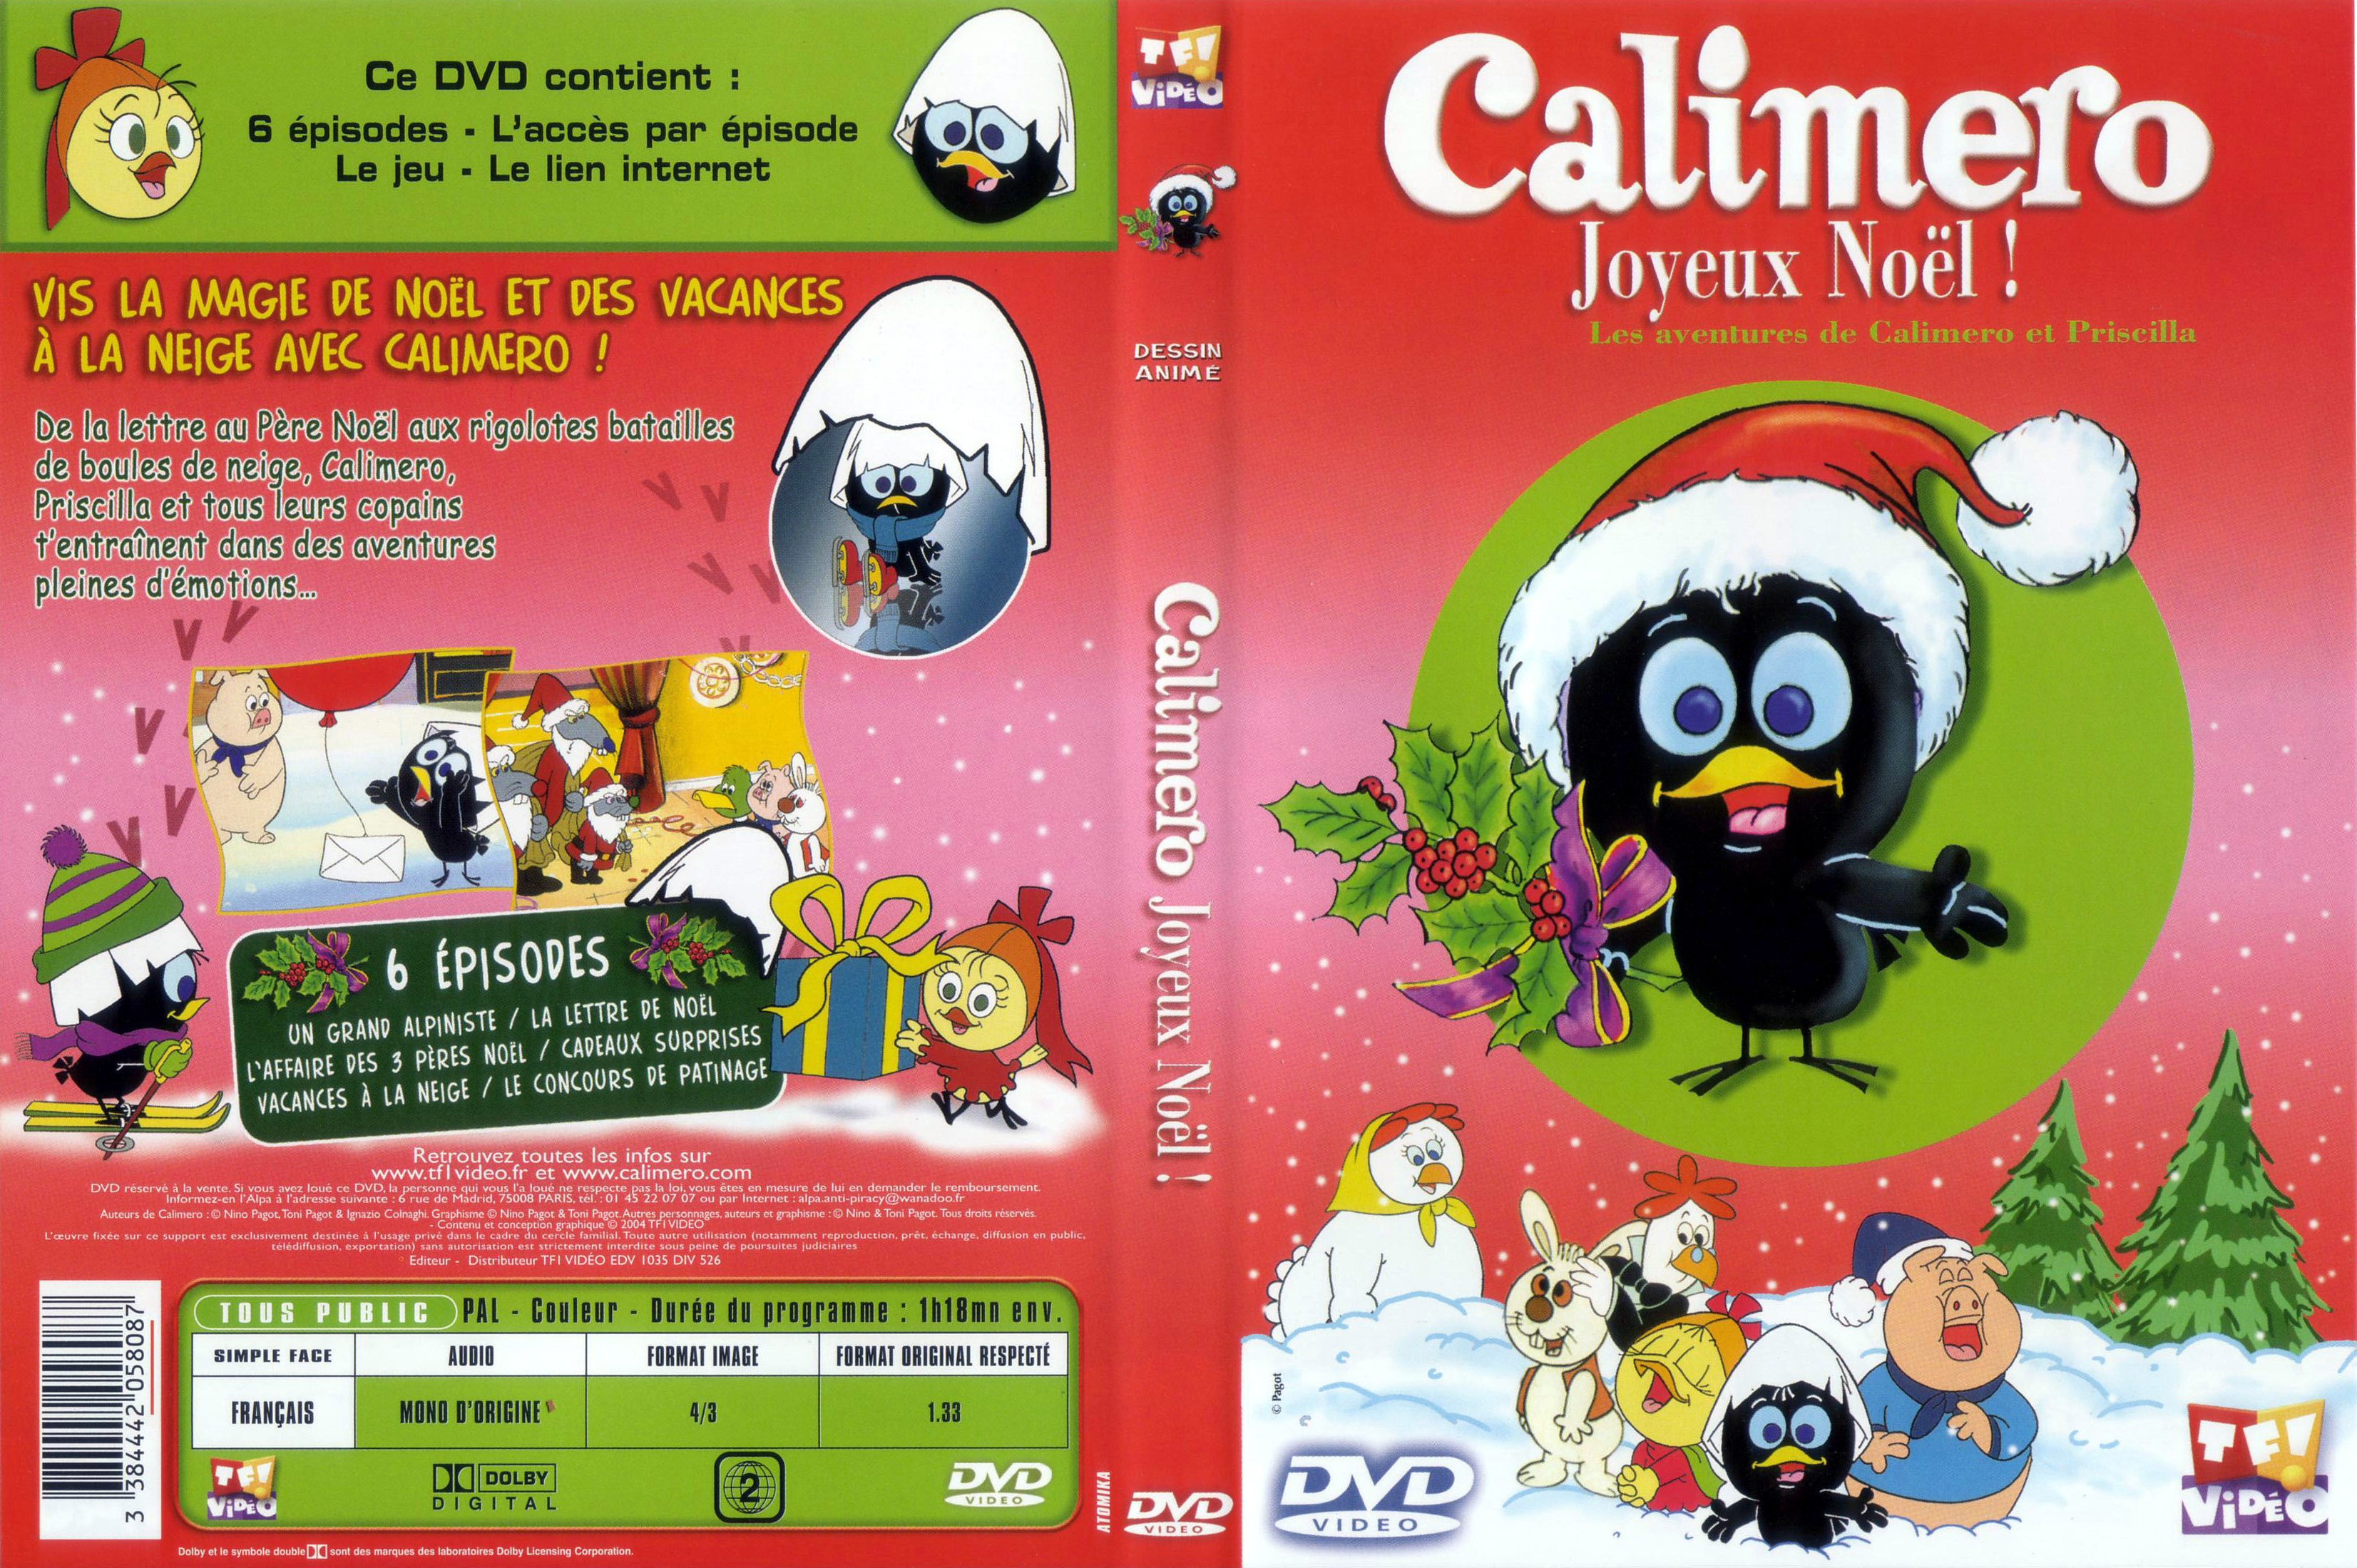 Jaquette DVD Calimero - joyeux noel